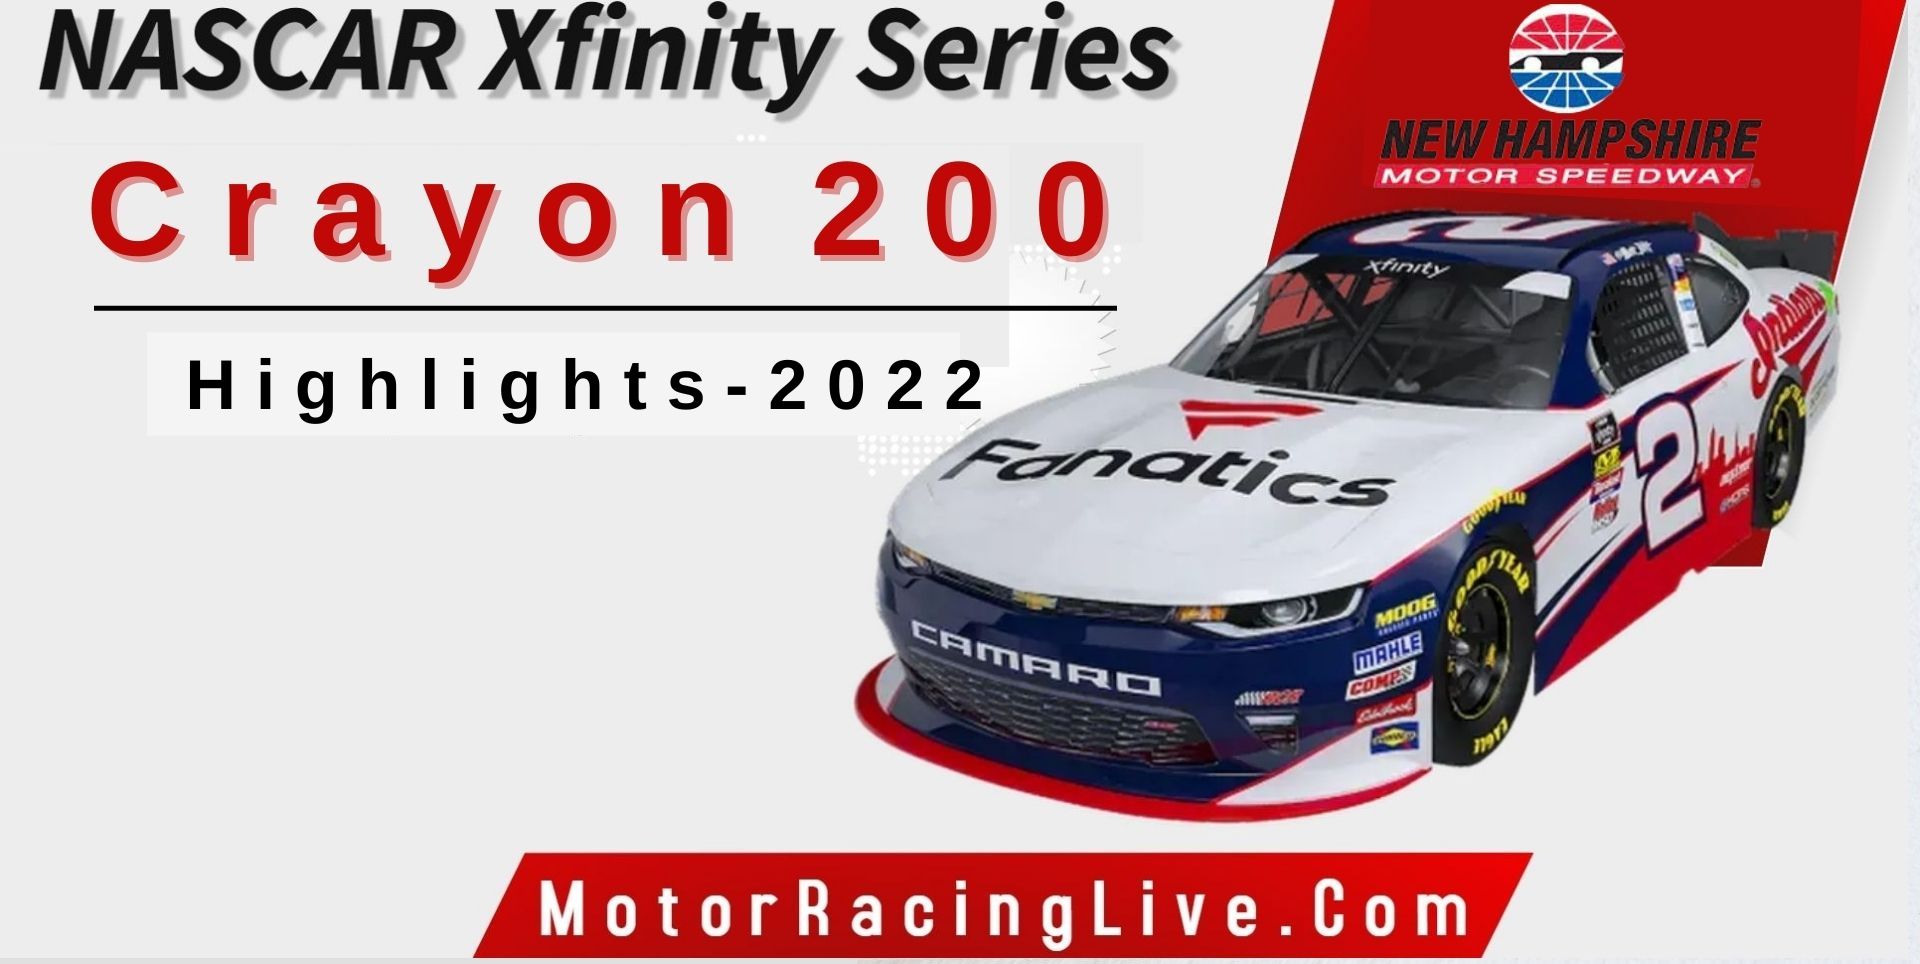 Crayon 200 Highlights 2022 NASCAR Xfinity Series